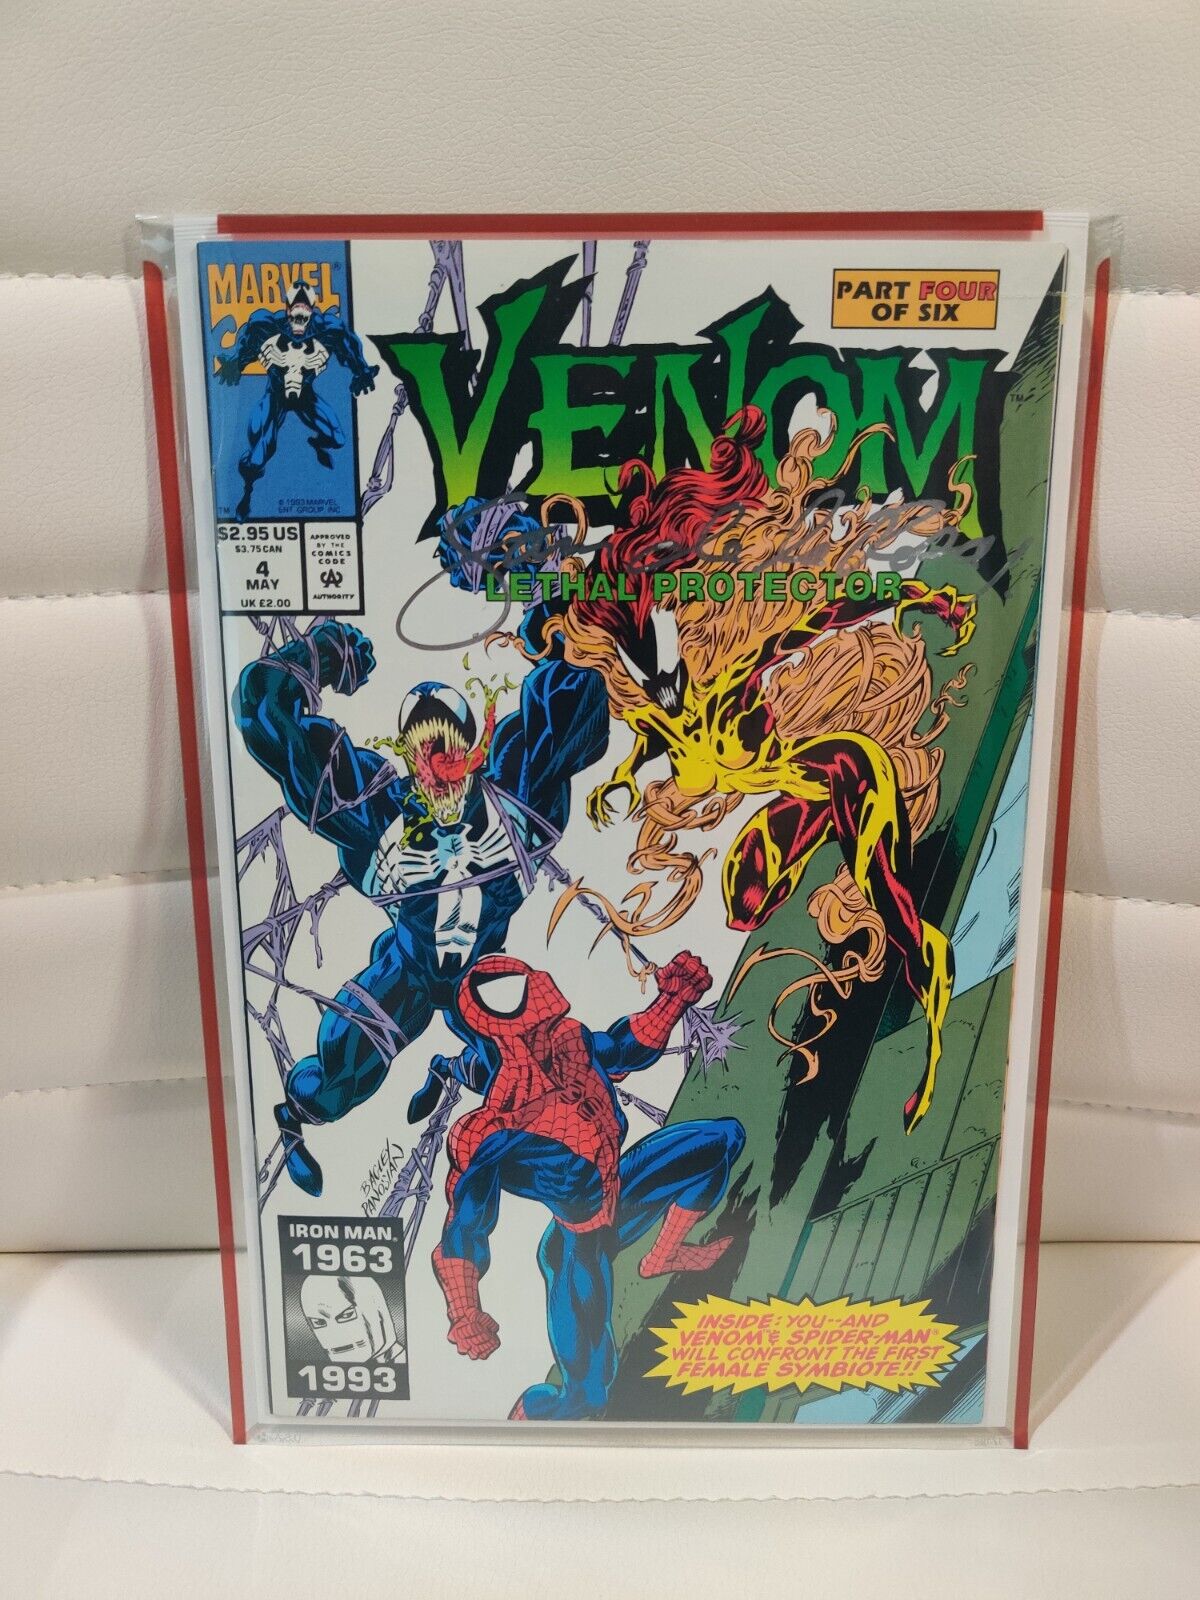 Venom Lethal Protector #4 Signed By Sam De La Rosa NM 1993 MARVEL Autographed